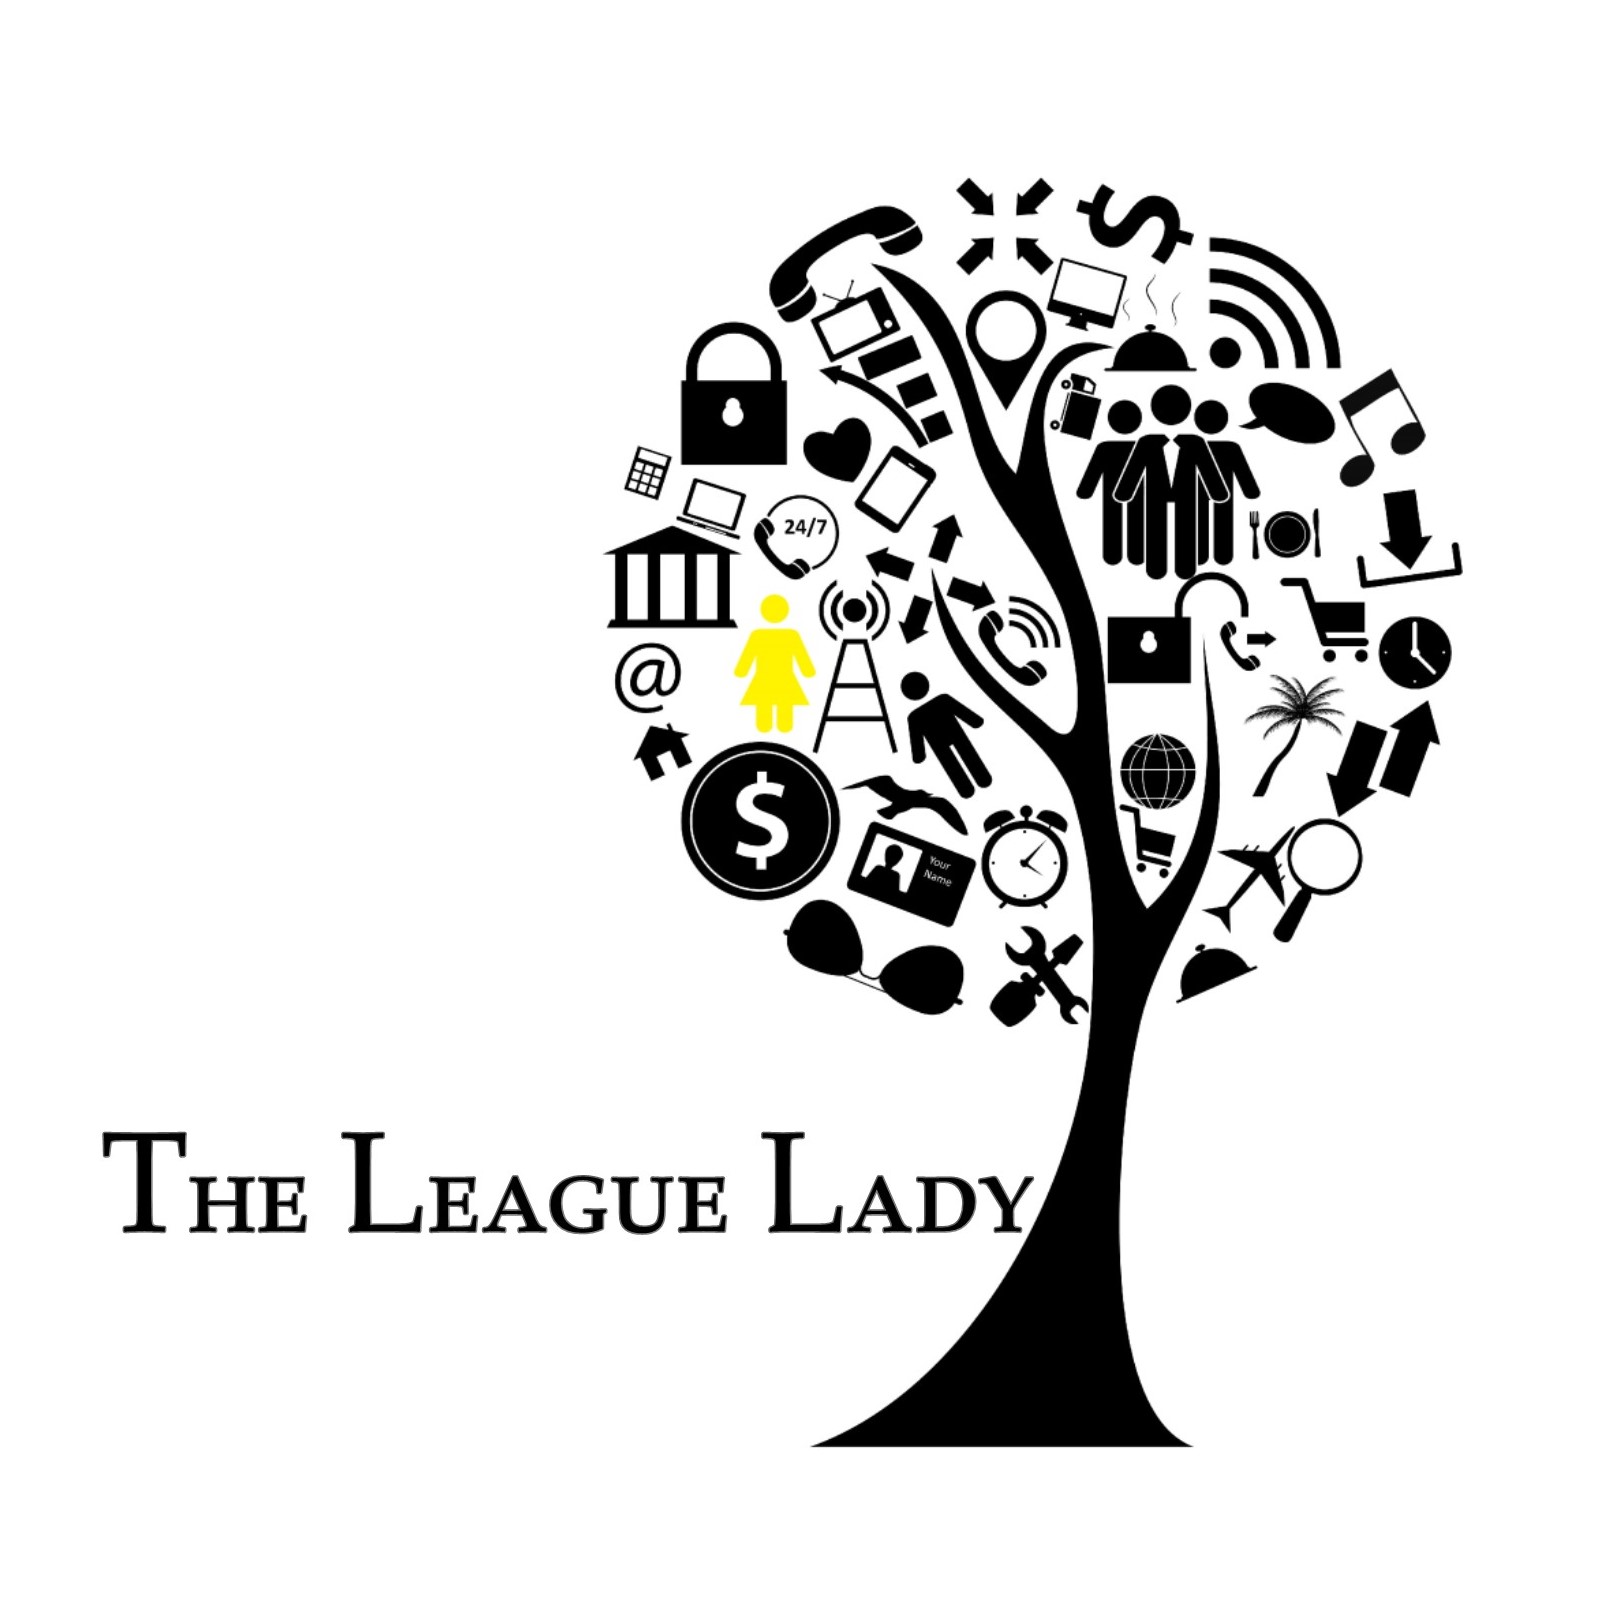 The League Lady